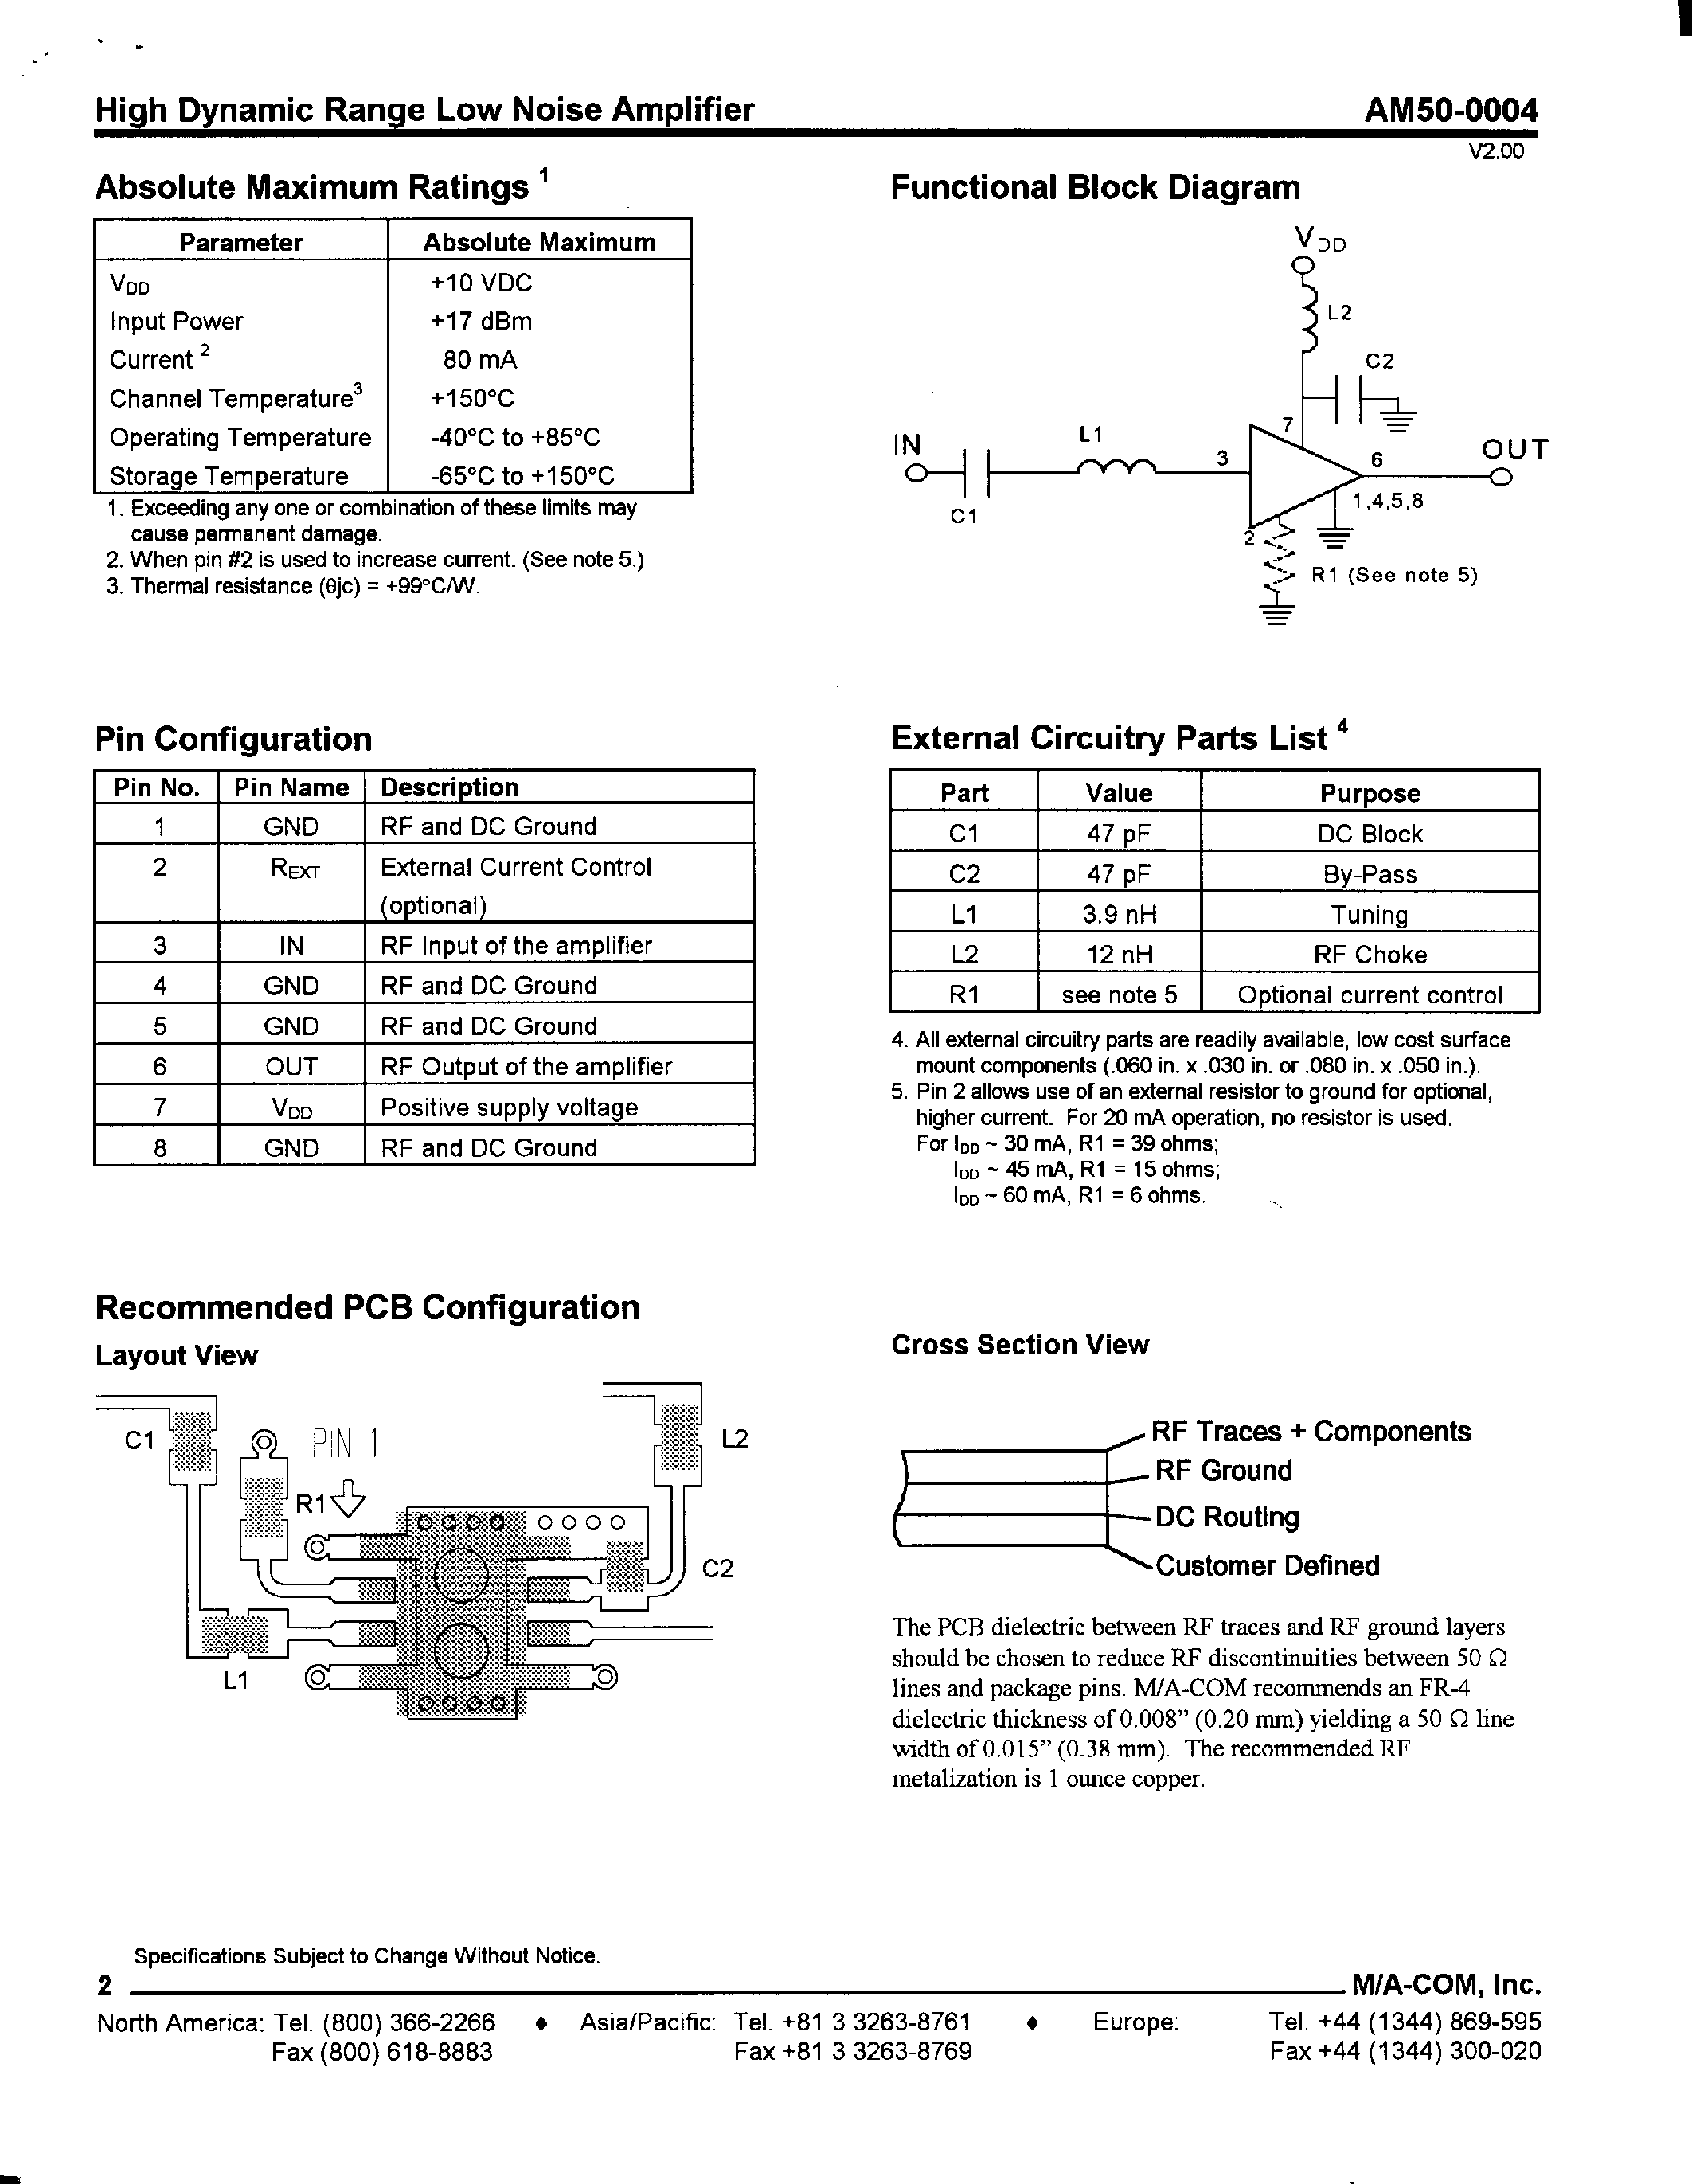 Datasheet AM50-0004SMB - High Dynamic Range Low Noise Amplifier 1400-2000 MHz page 2